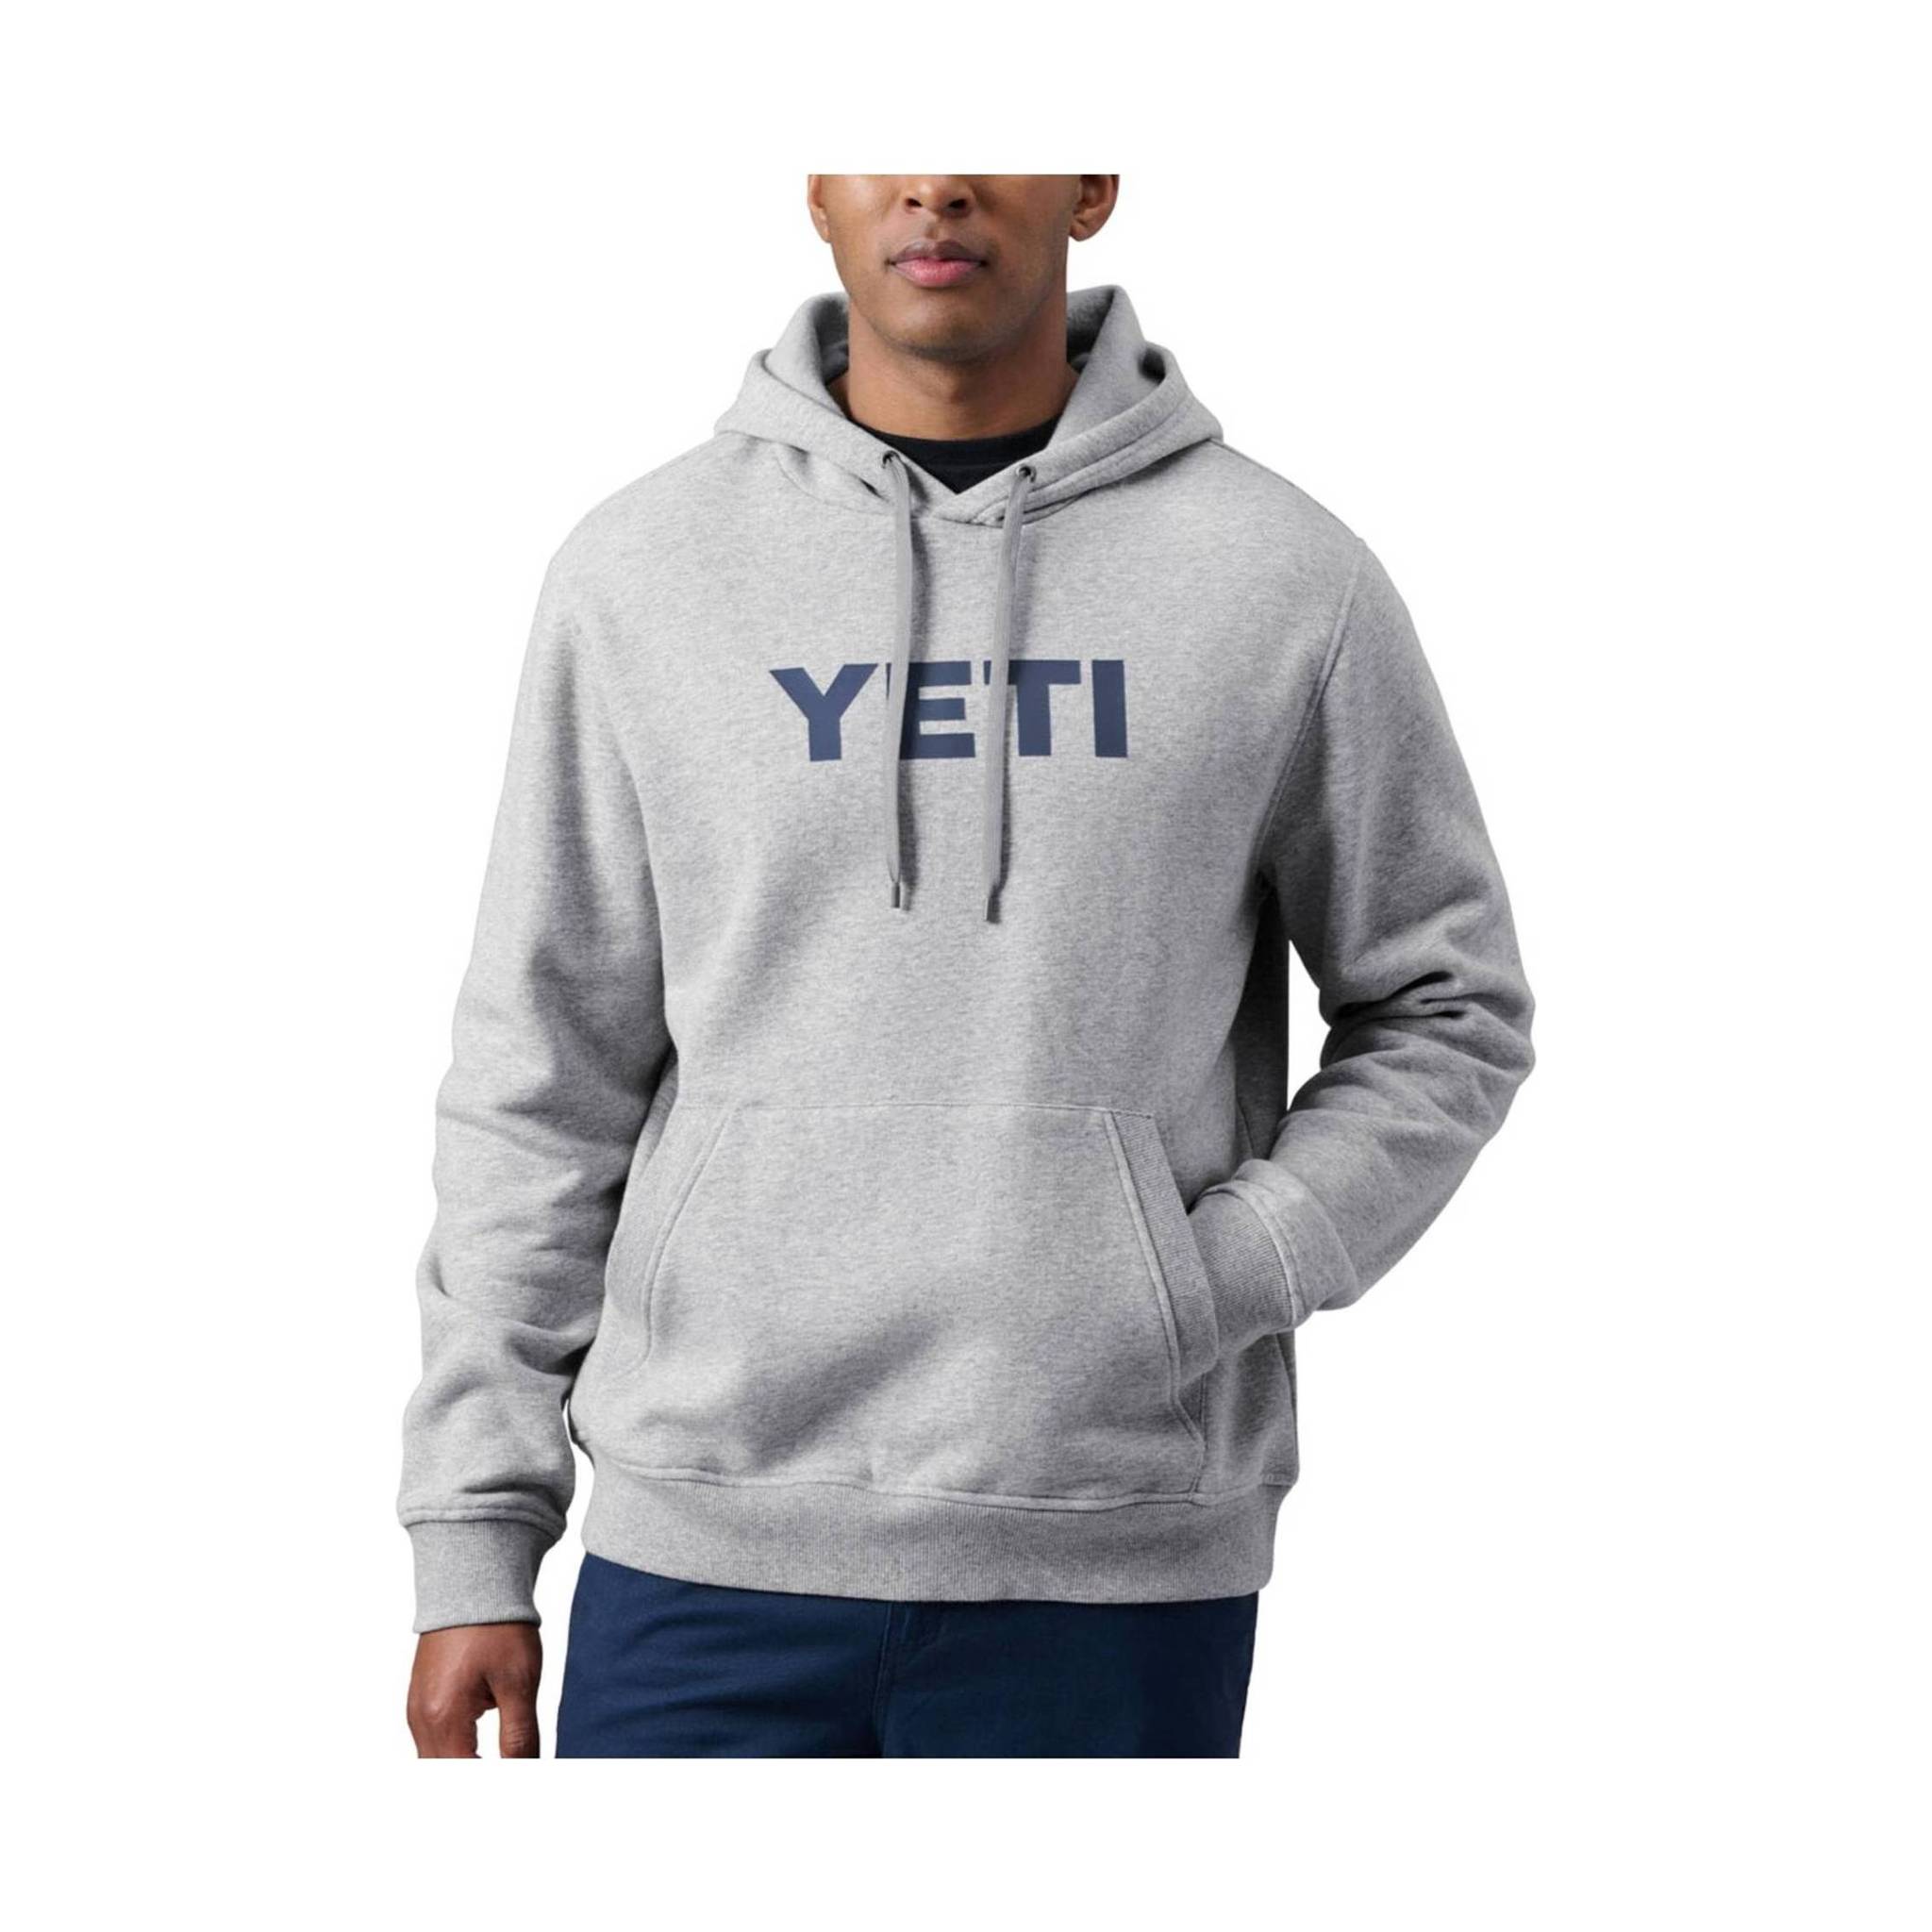 Yeti Men's Brushed Fleece Logo Pullover Hoodie - Heather Grey M / Heather Gray